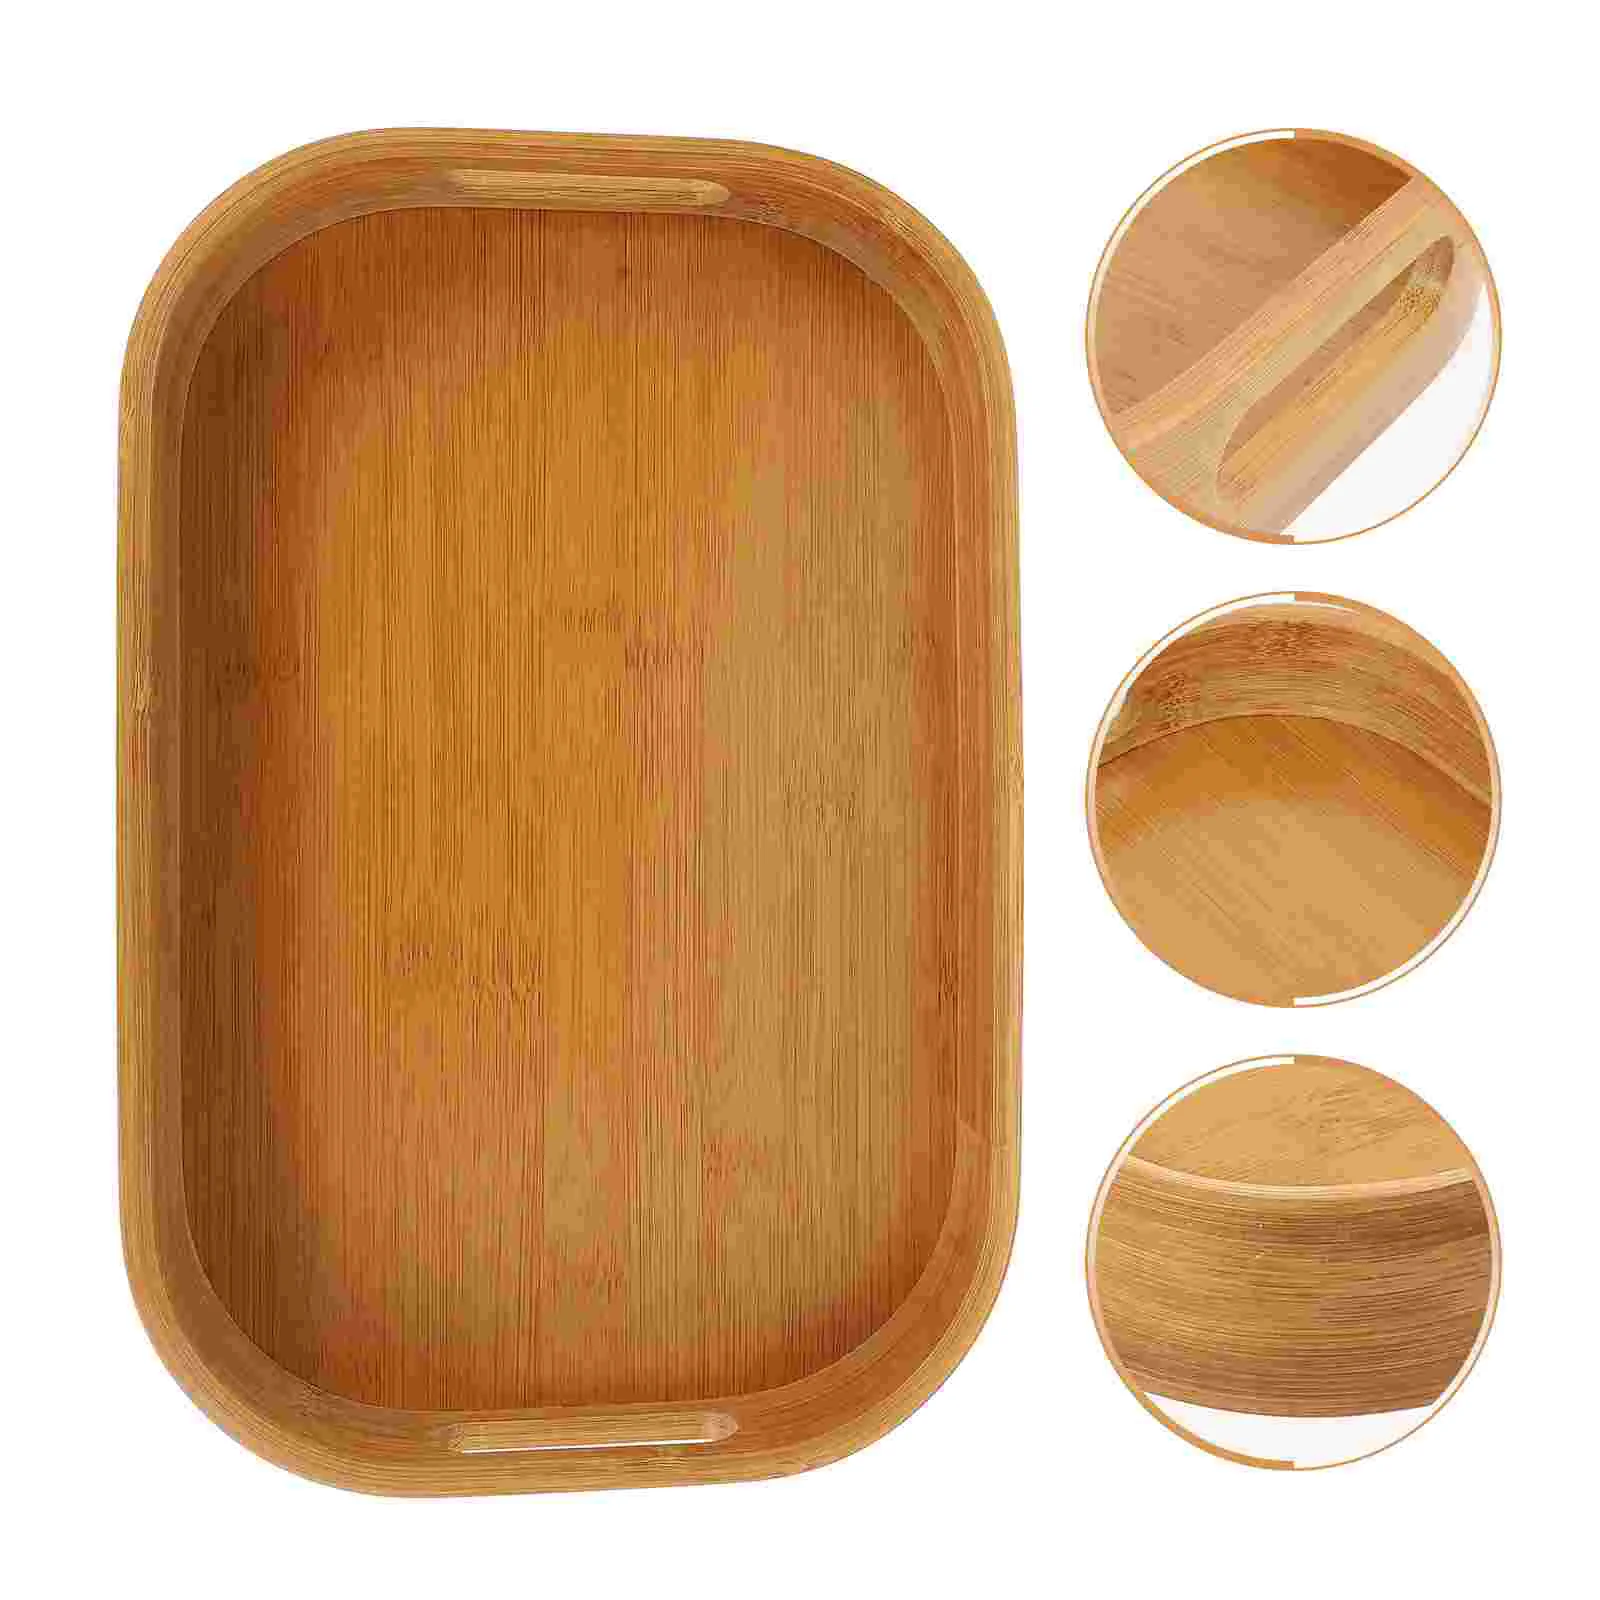 

Tray Wood Platter Breakfast Serving Table Ottoman Coffee Handles Bamboo Tea Trays Wooden Food Bread Baking Lunch Rectangular